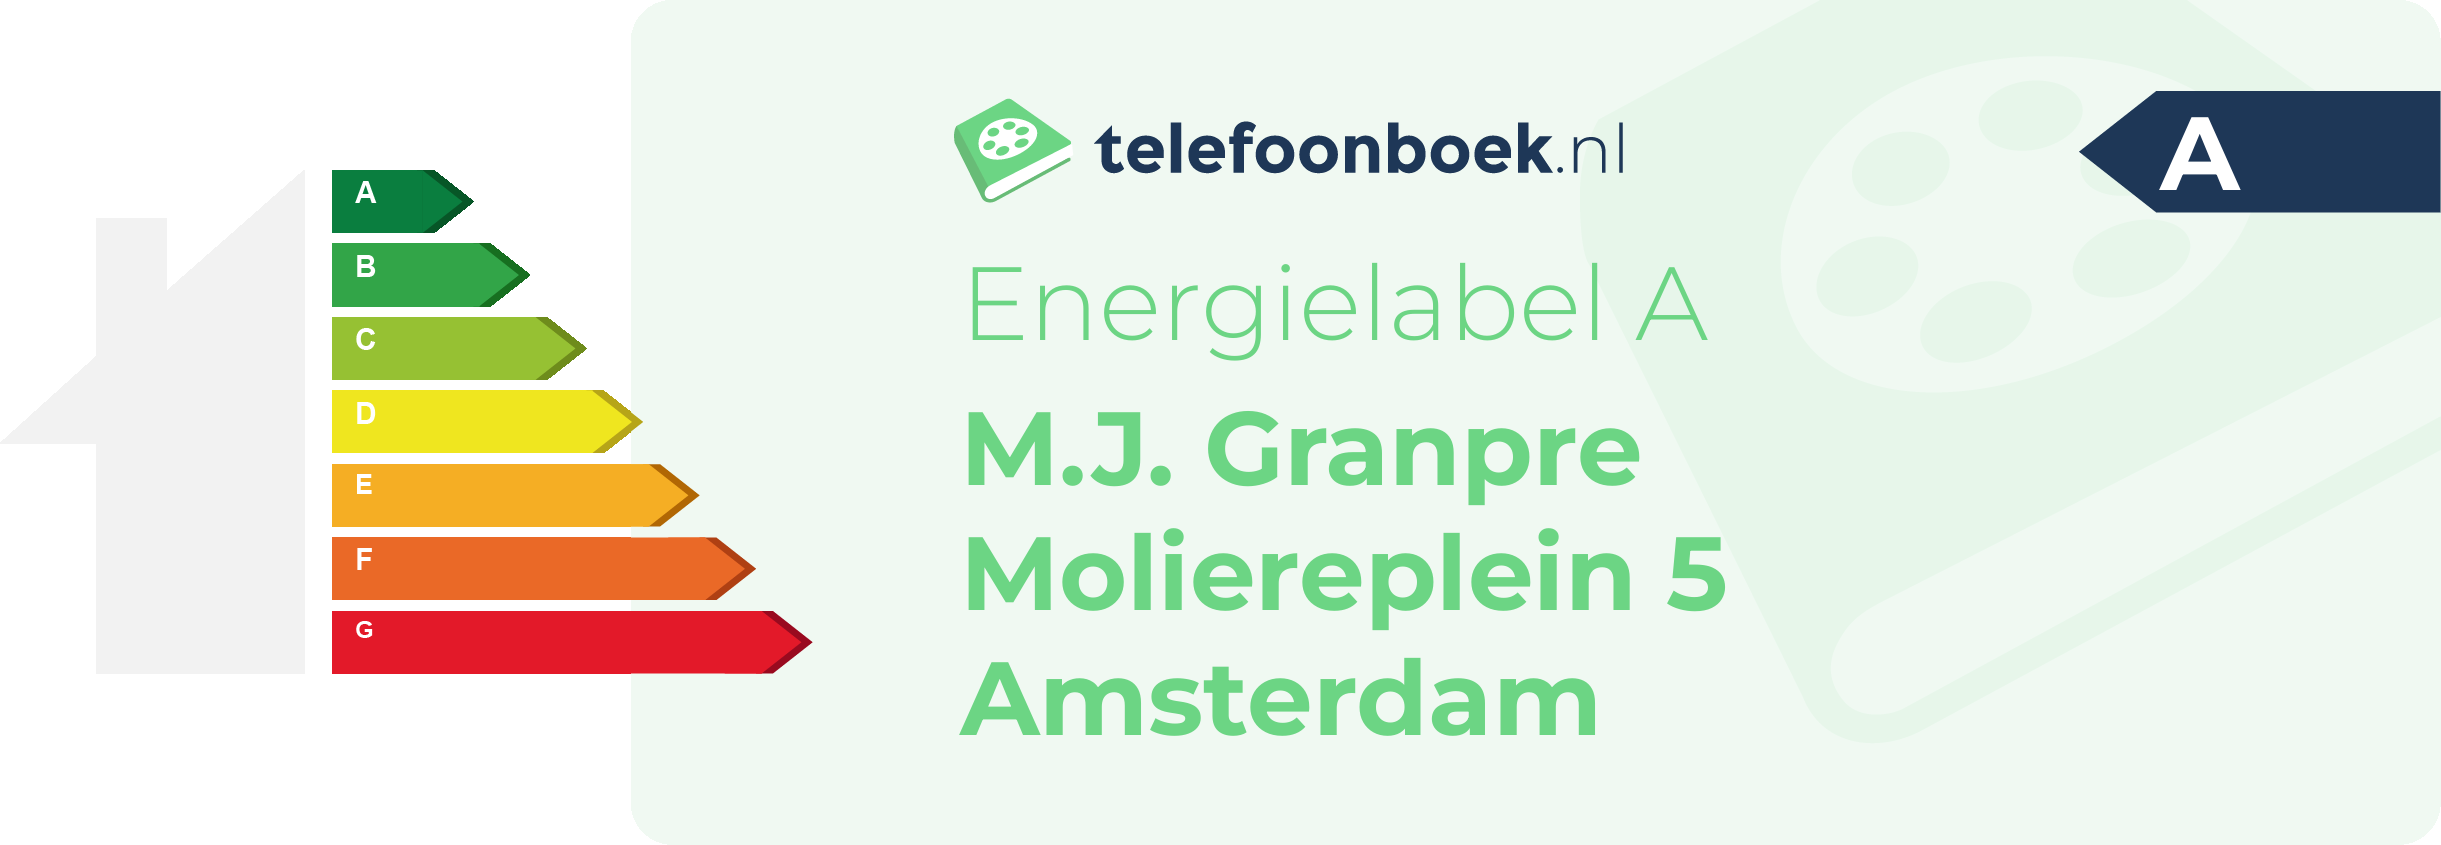 Energielabel M.J. Granpre Moliereplein 5 Amsterdam